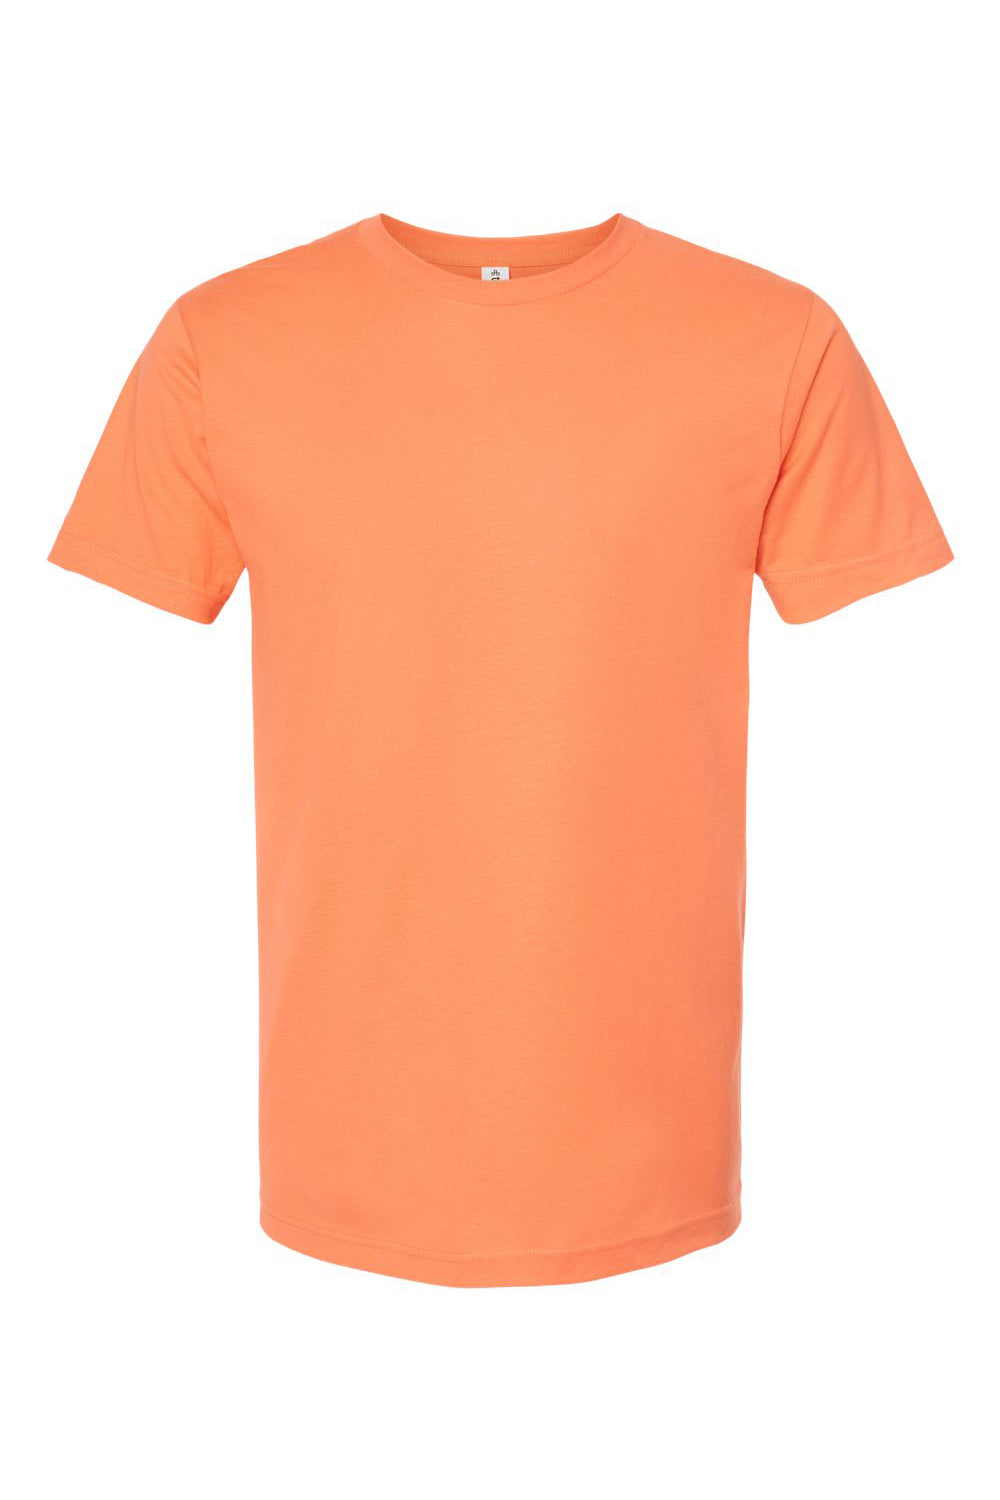 Tultex 202 Mens Fine Jersey Short Sleeve Crewneck T-Shirt Coral Orange Flat Front